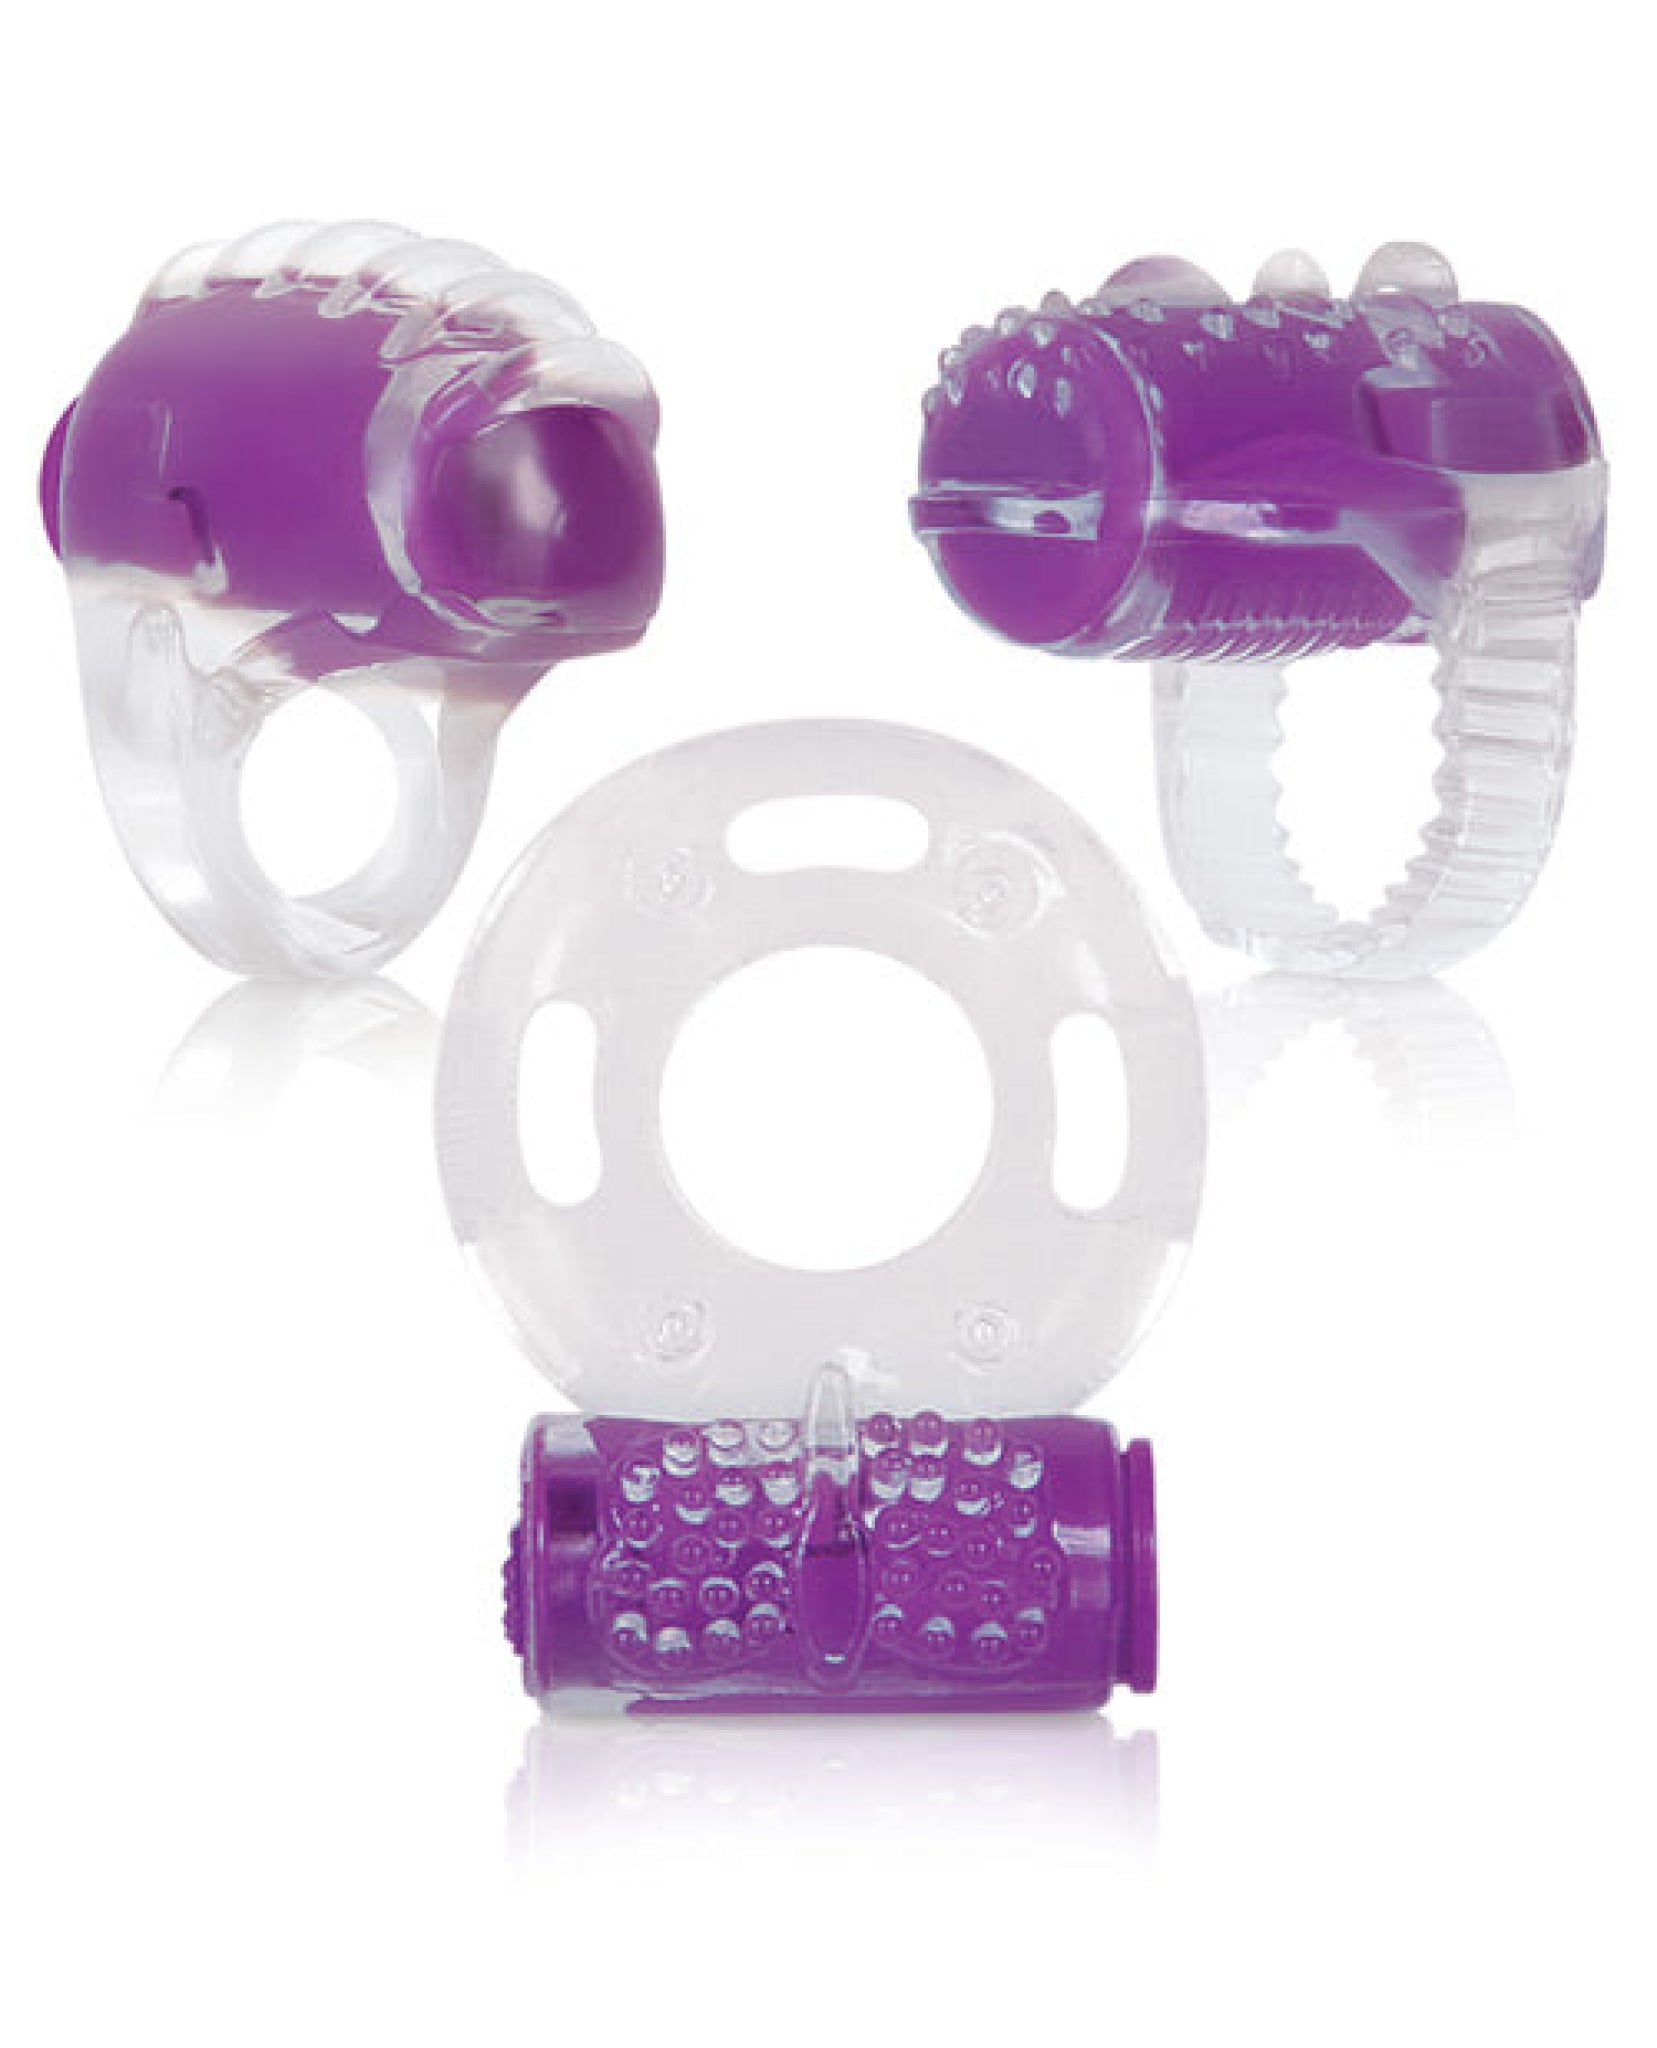 Evolved Ring True Unique Pleasure Rings Kit - 3 Pack Clear-purple Evolved Novelties